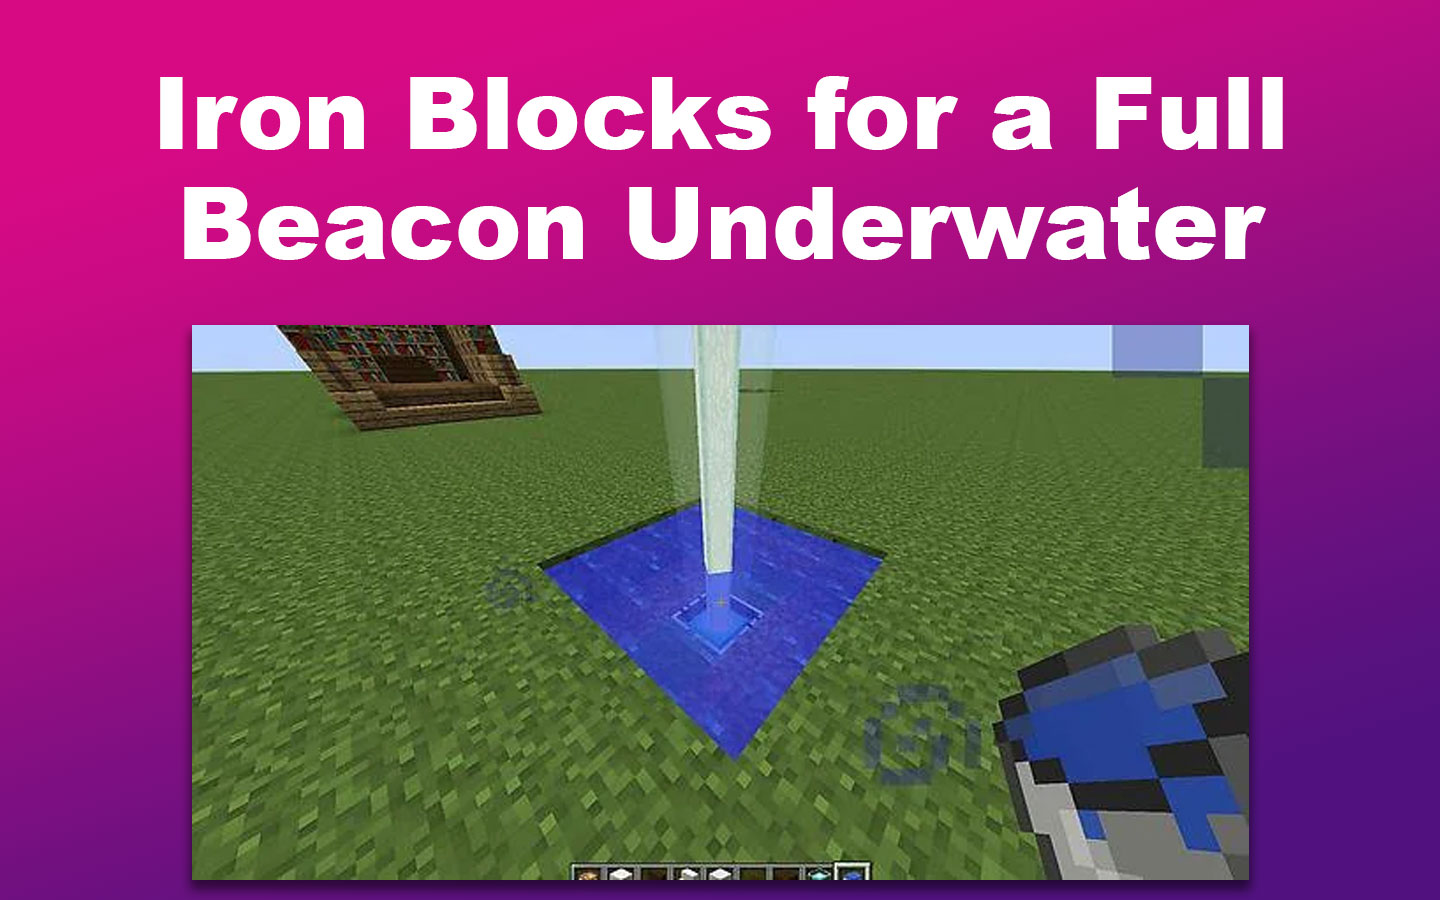 Iron Blocks for a Full Beacon Underwater